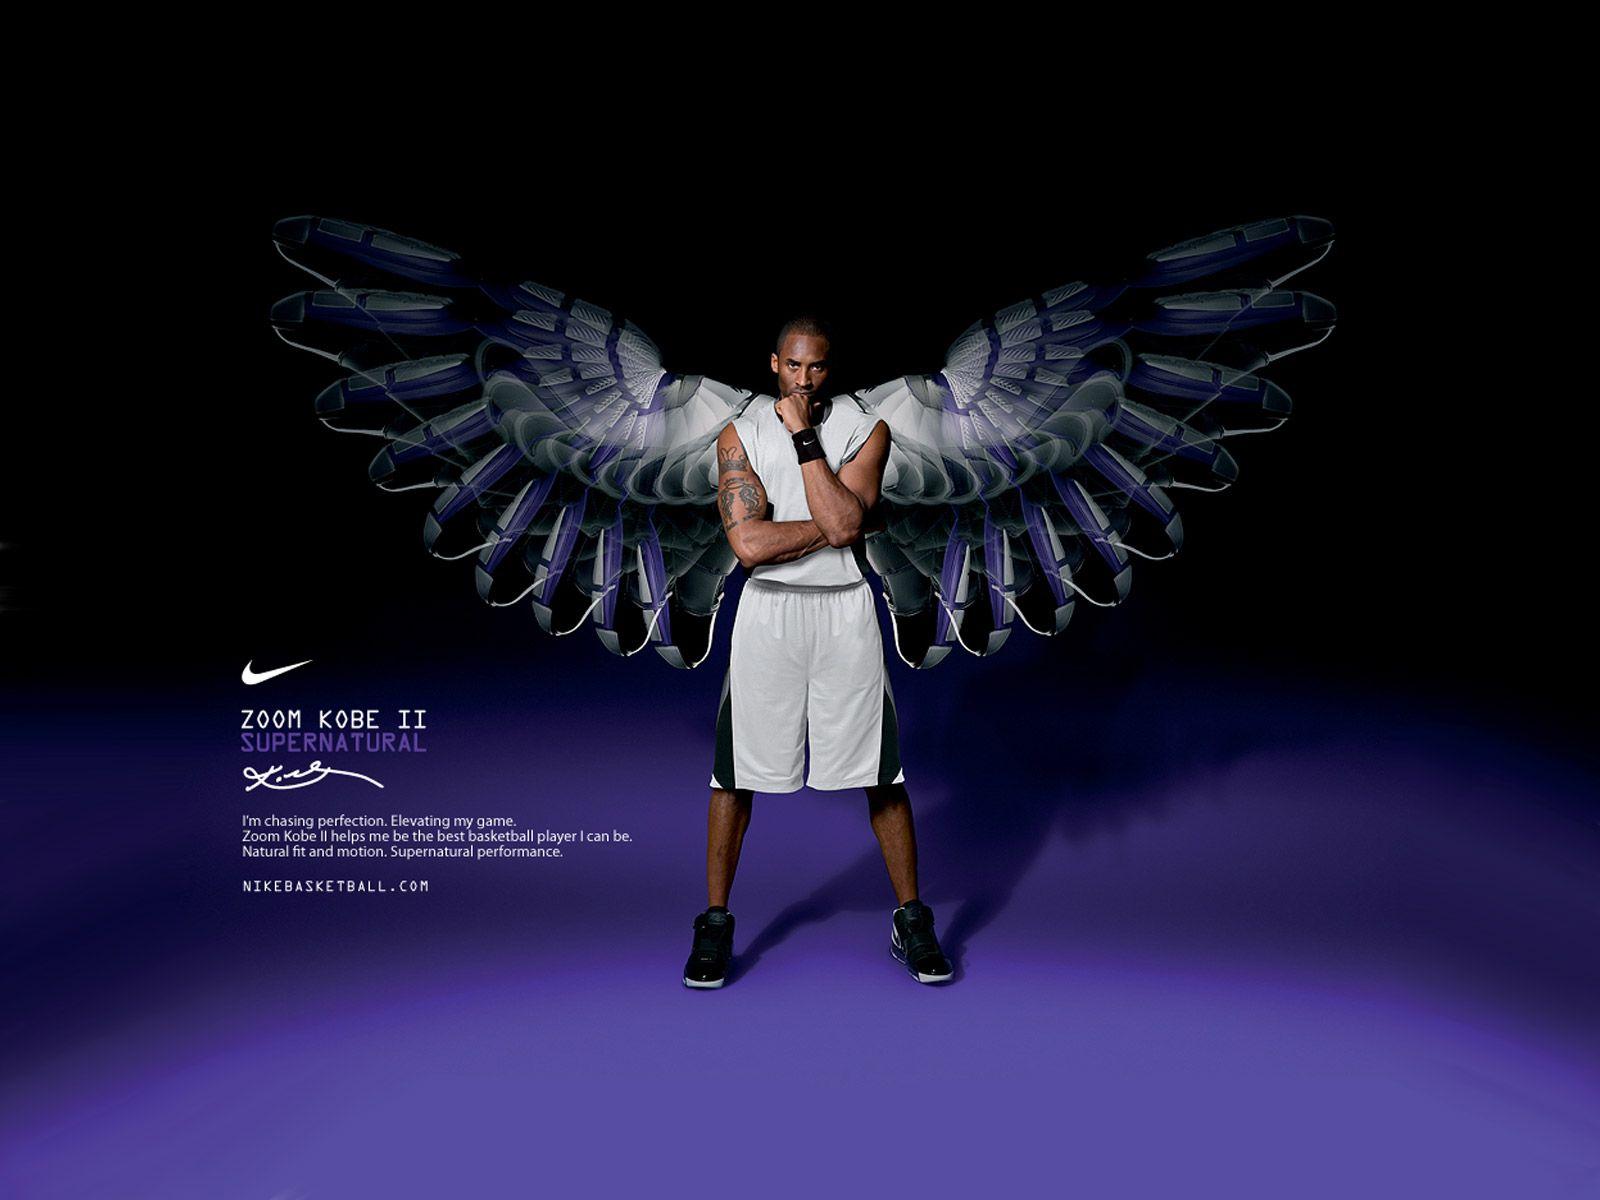 Kobe Bryant Nike Zoom II Wallpaper. hdwallpaper